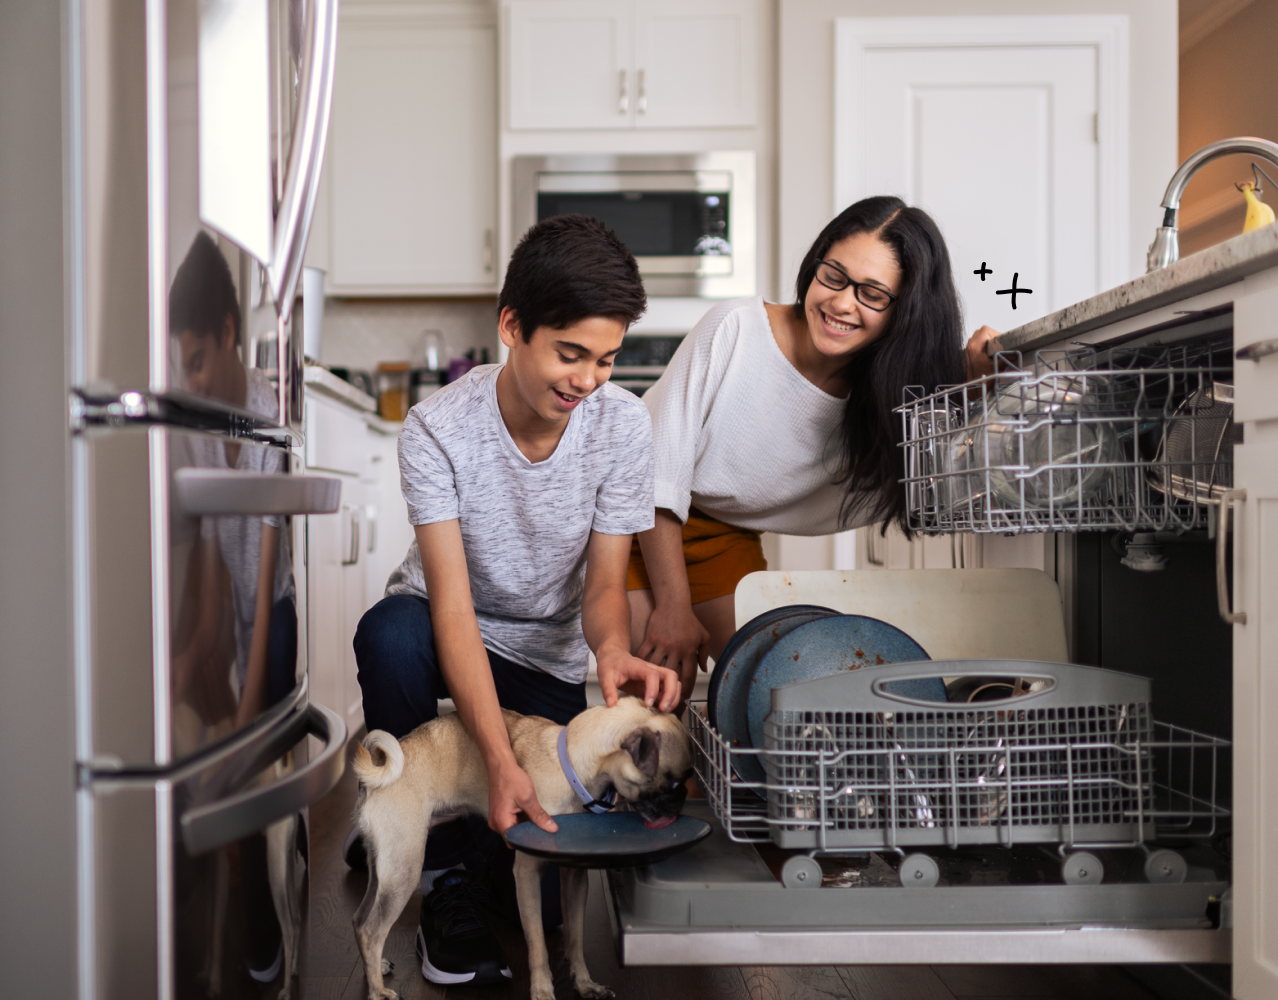 Appliance protection kids and dog broken dishwasher